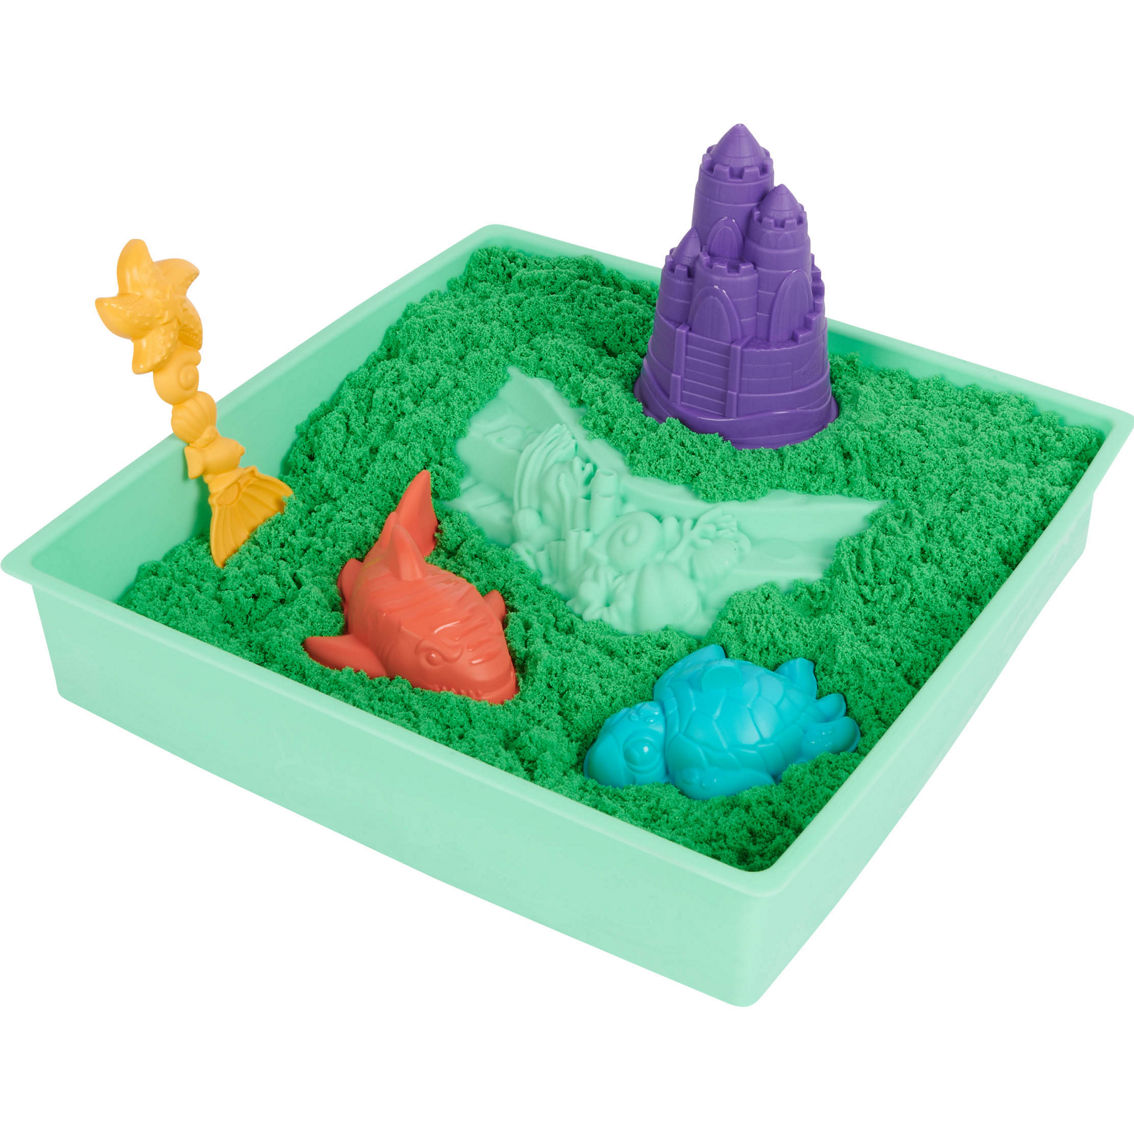 Kinetic Sand Sandbox Set, Version 2 - Image 2 of 3